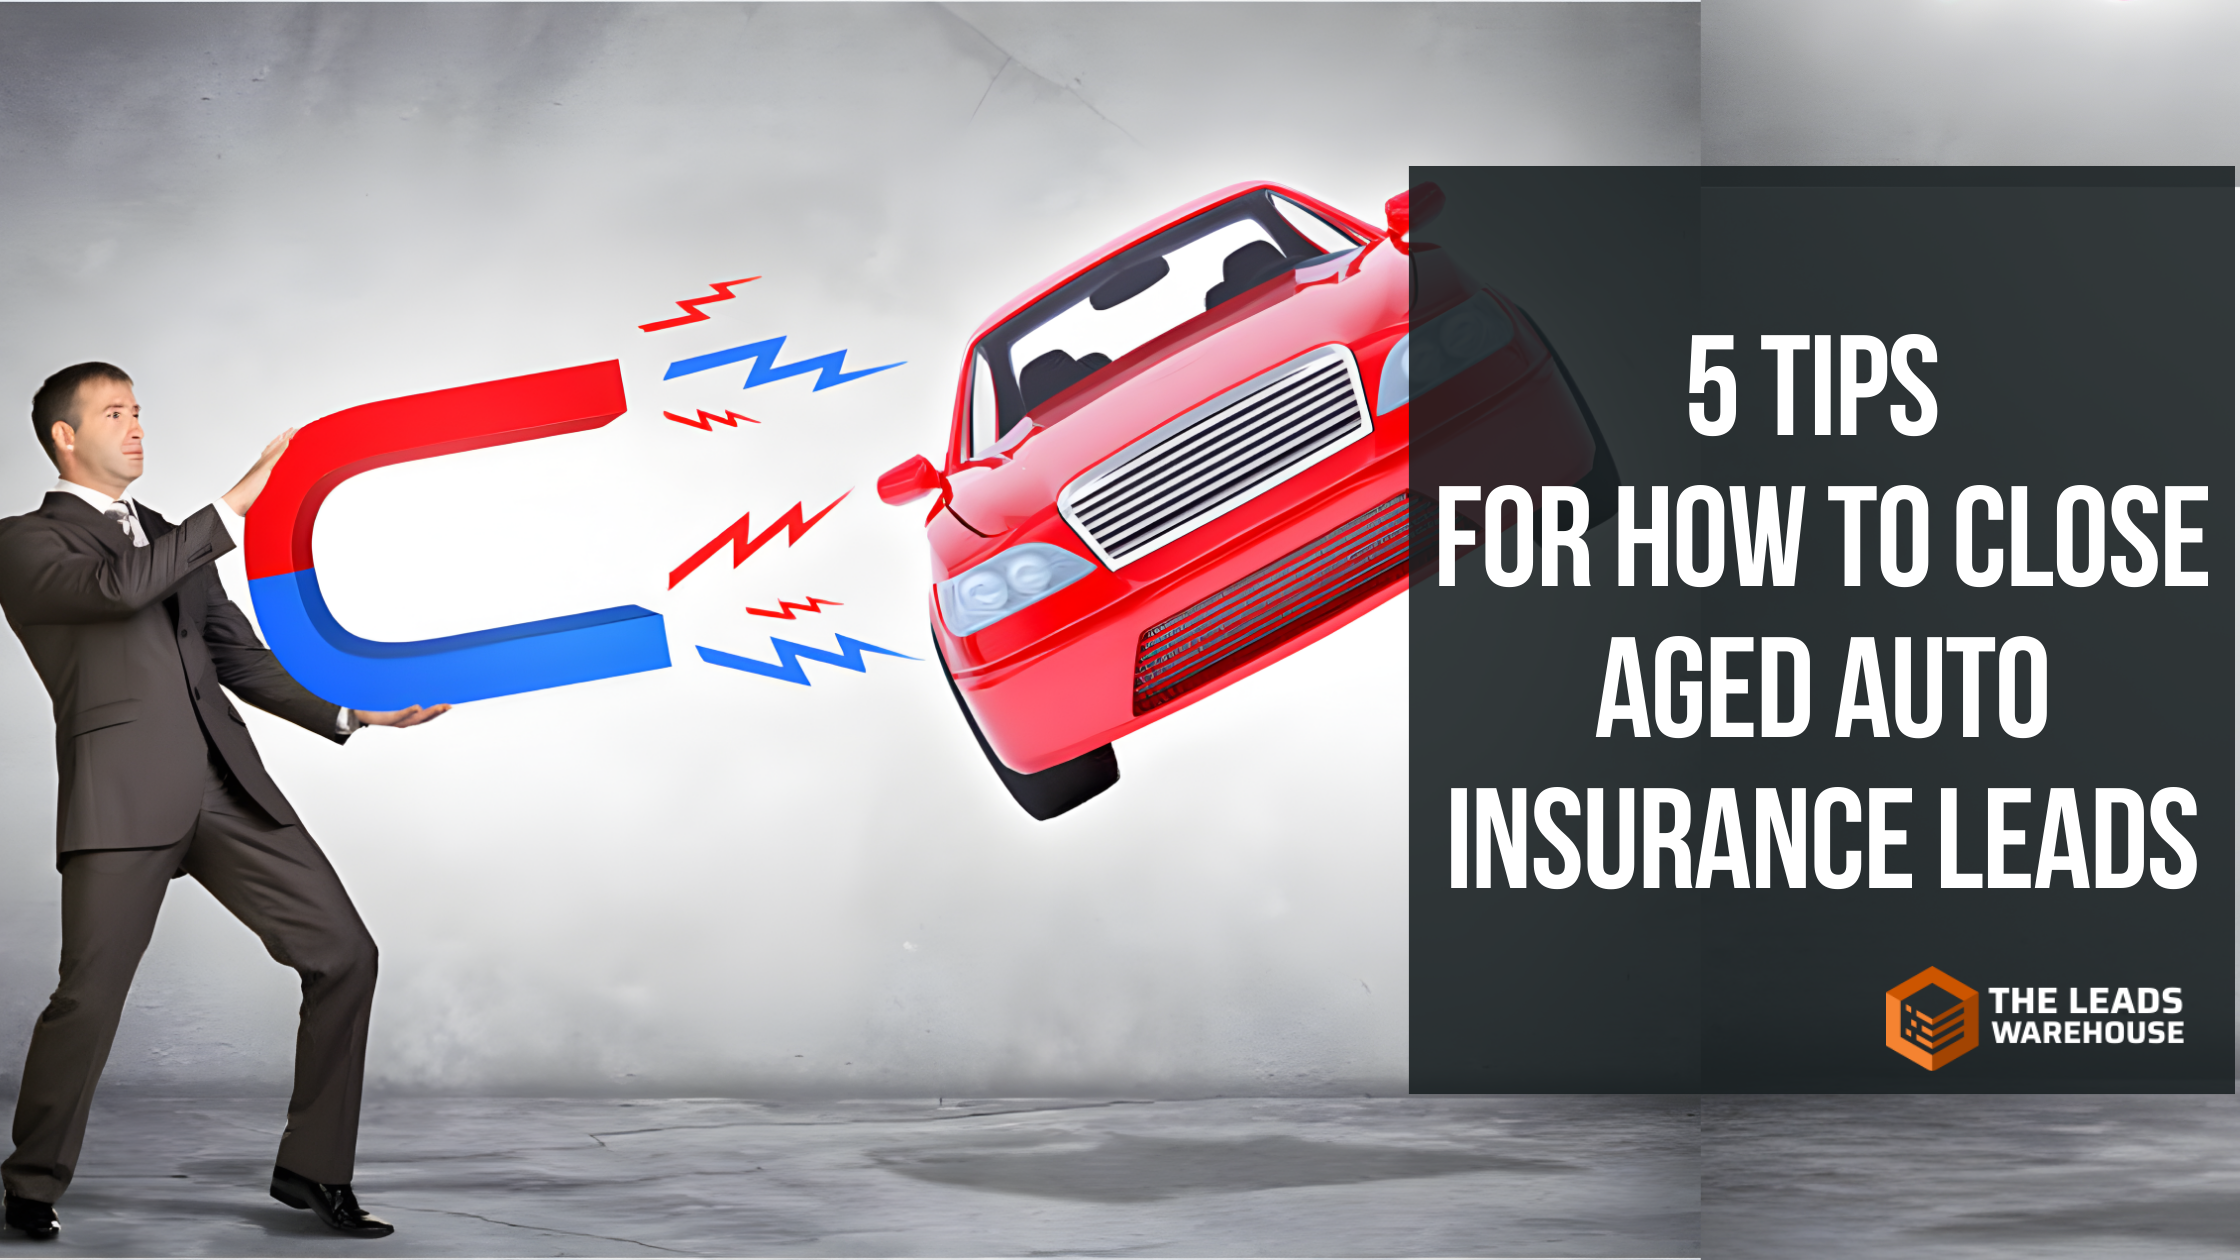 Close Auto Insurance Leads | 5 Tips